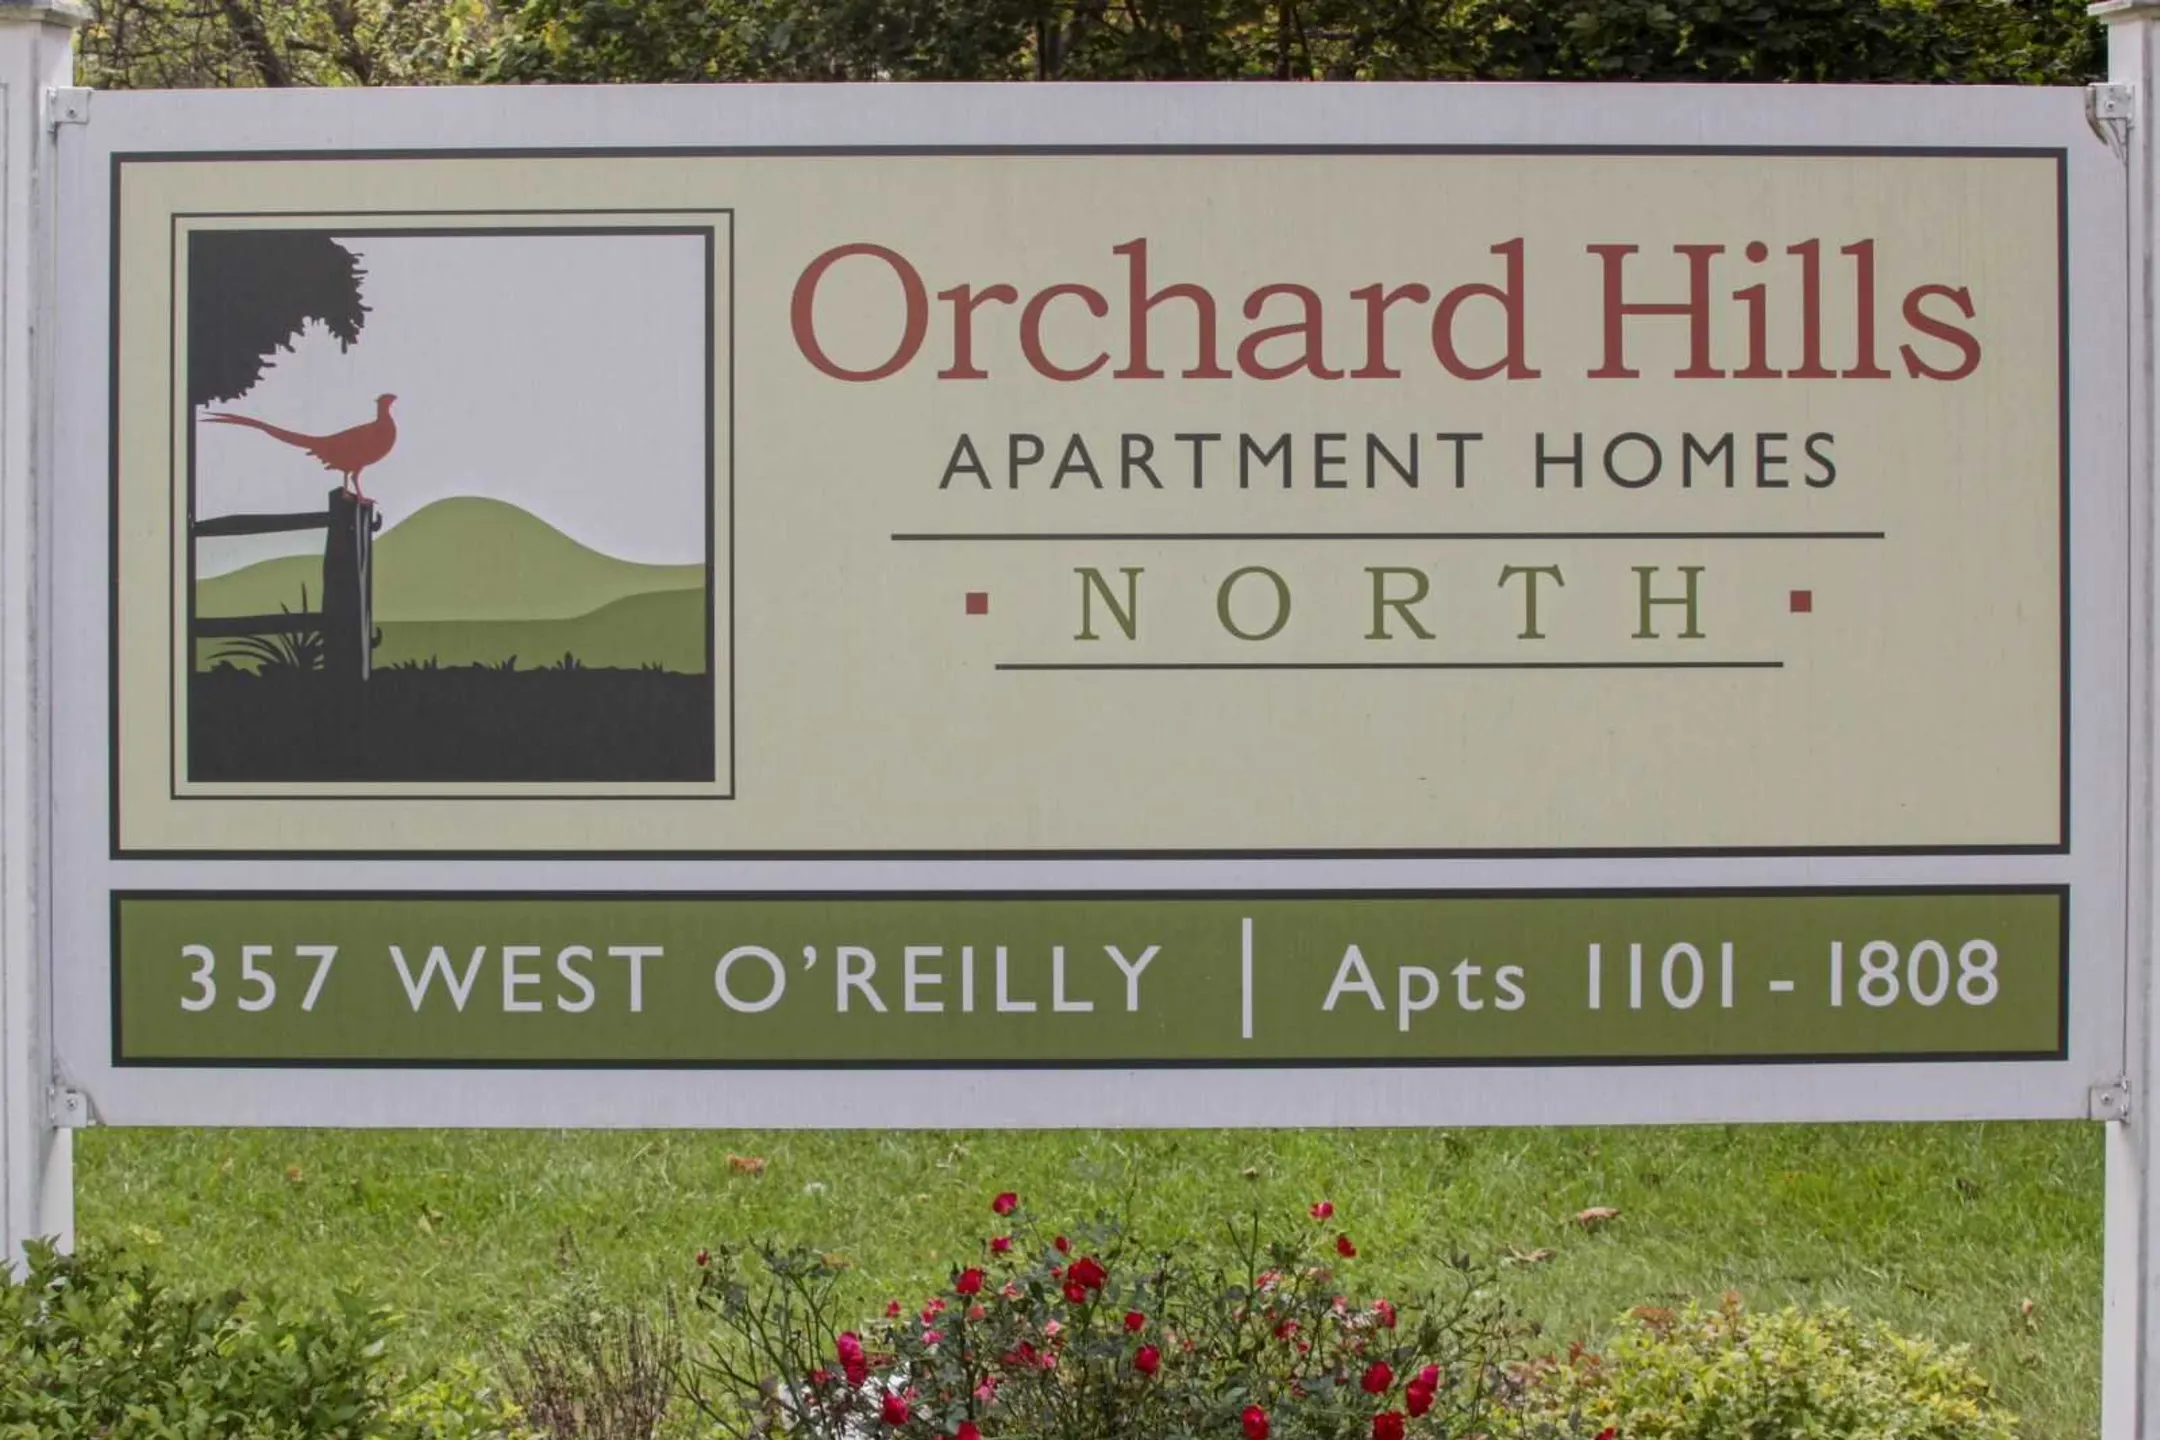 Building - Orchard Hills Apartment Homes - Kingston, NY